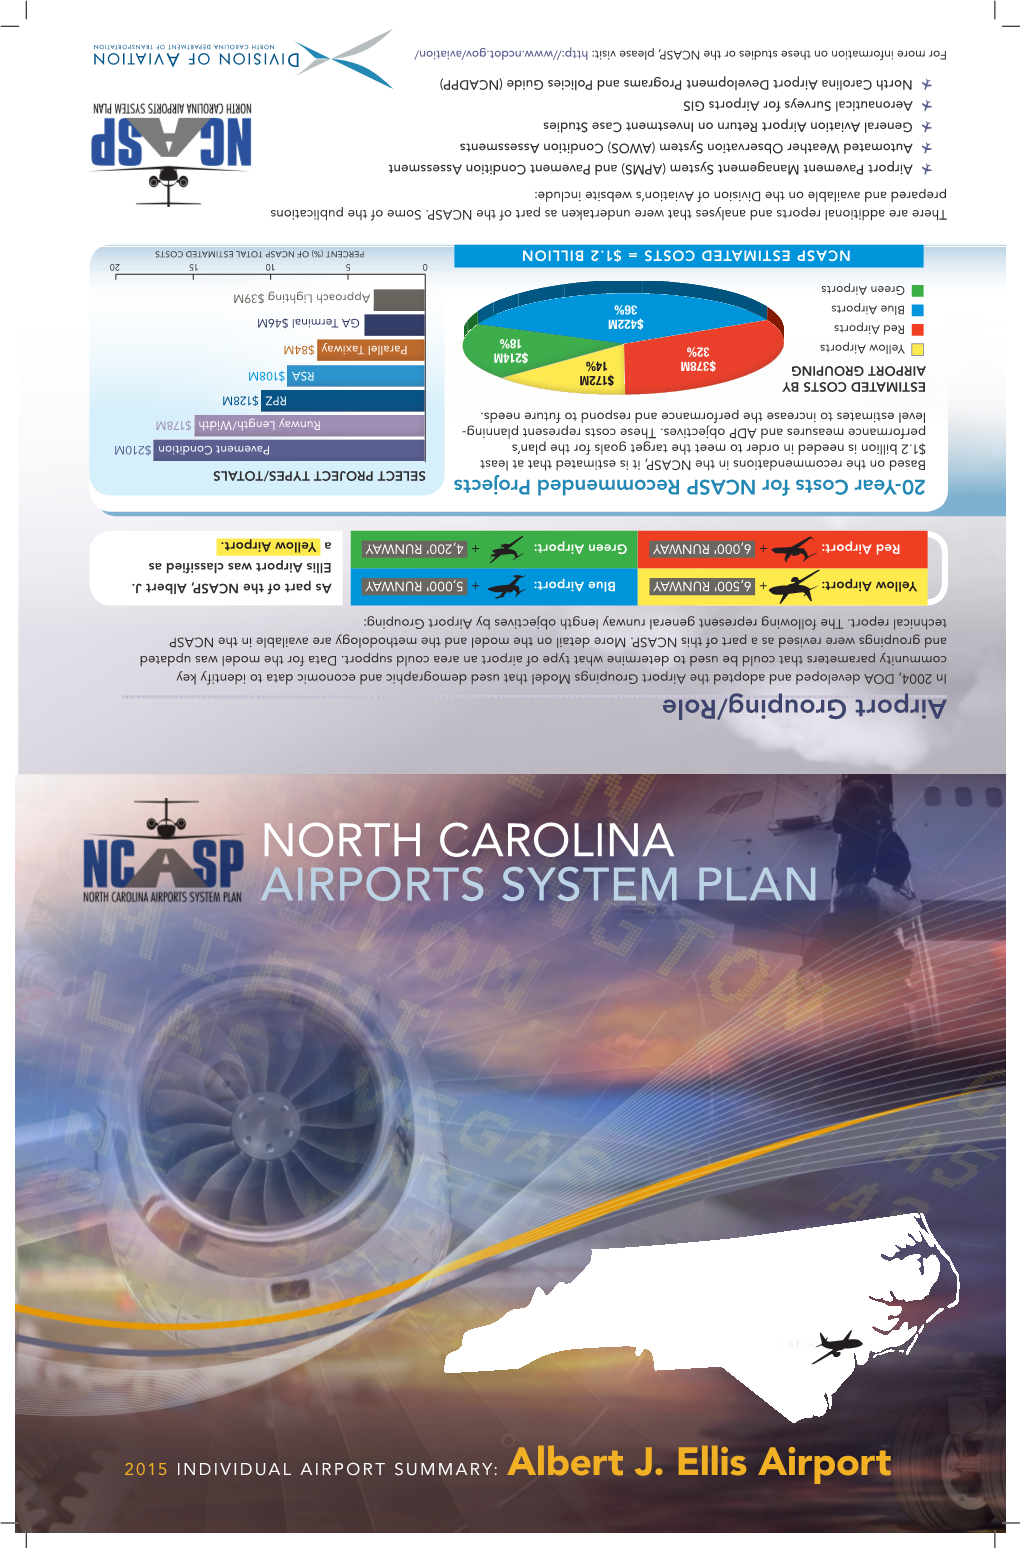 North Carolina Airports System Plan (NCASP)